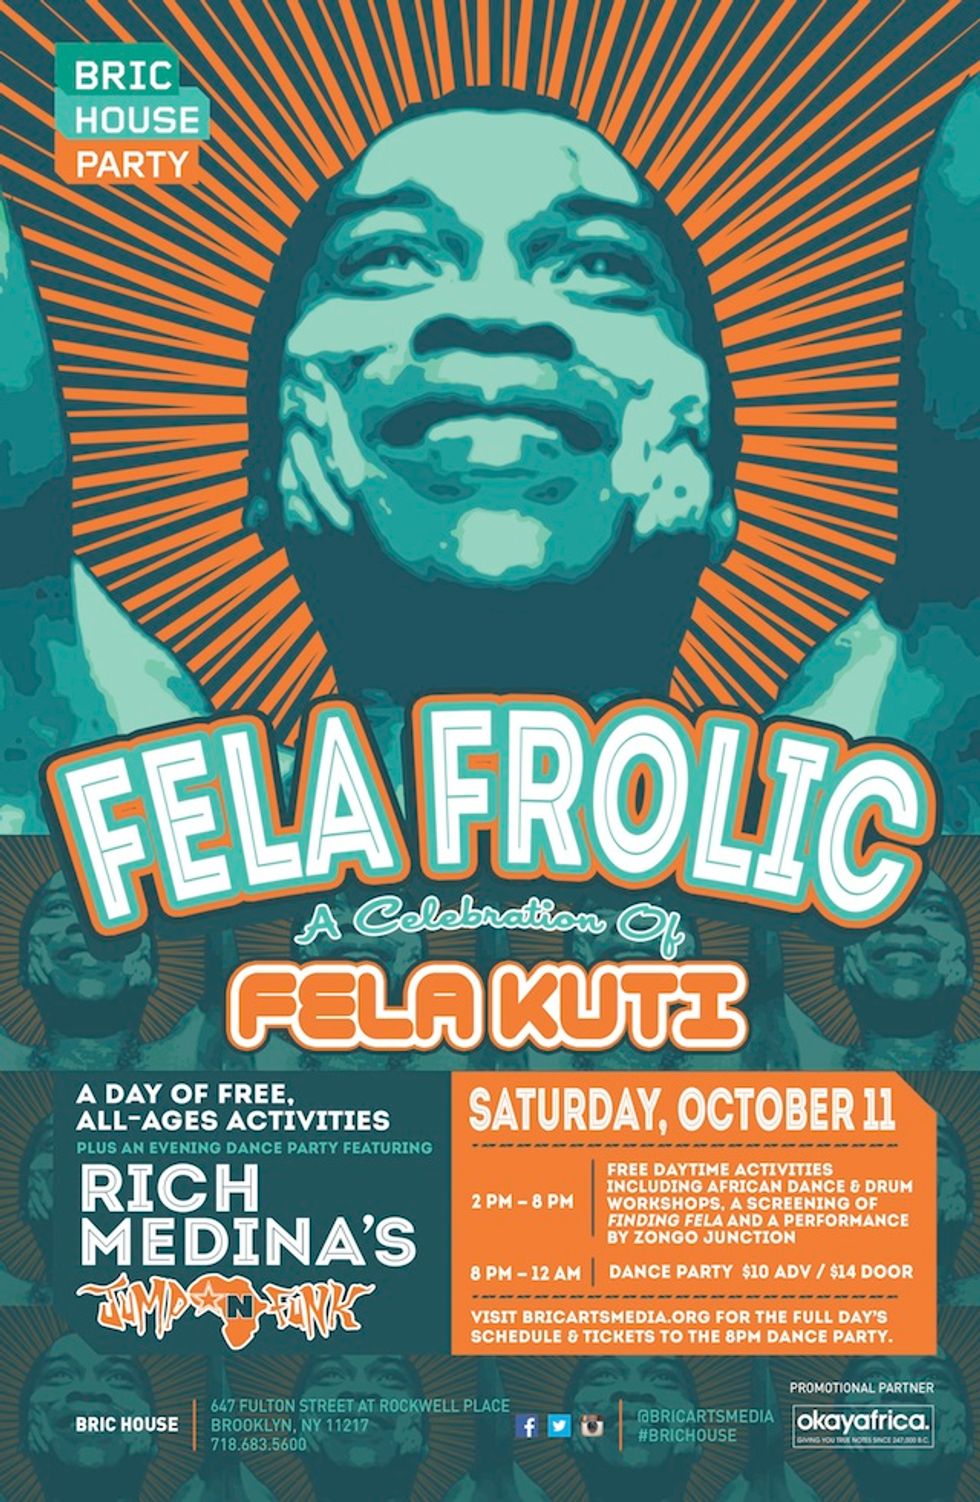 BRIC's FELA FROLIC: Rich Medina's Jump N Funk' Dance Party + 'Finding Fela' Screening